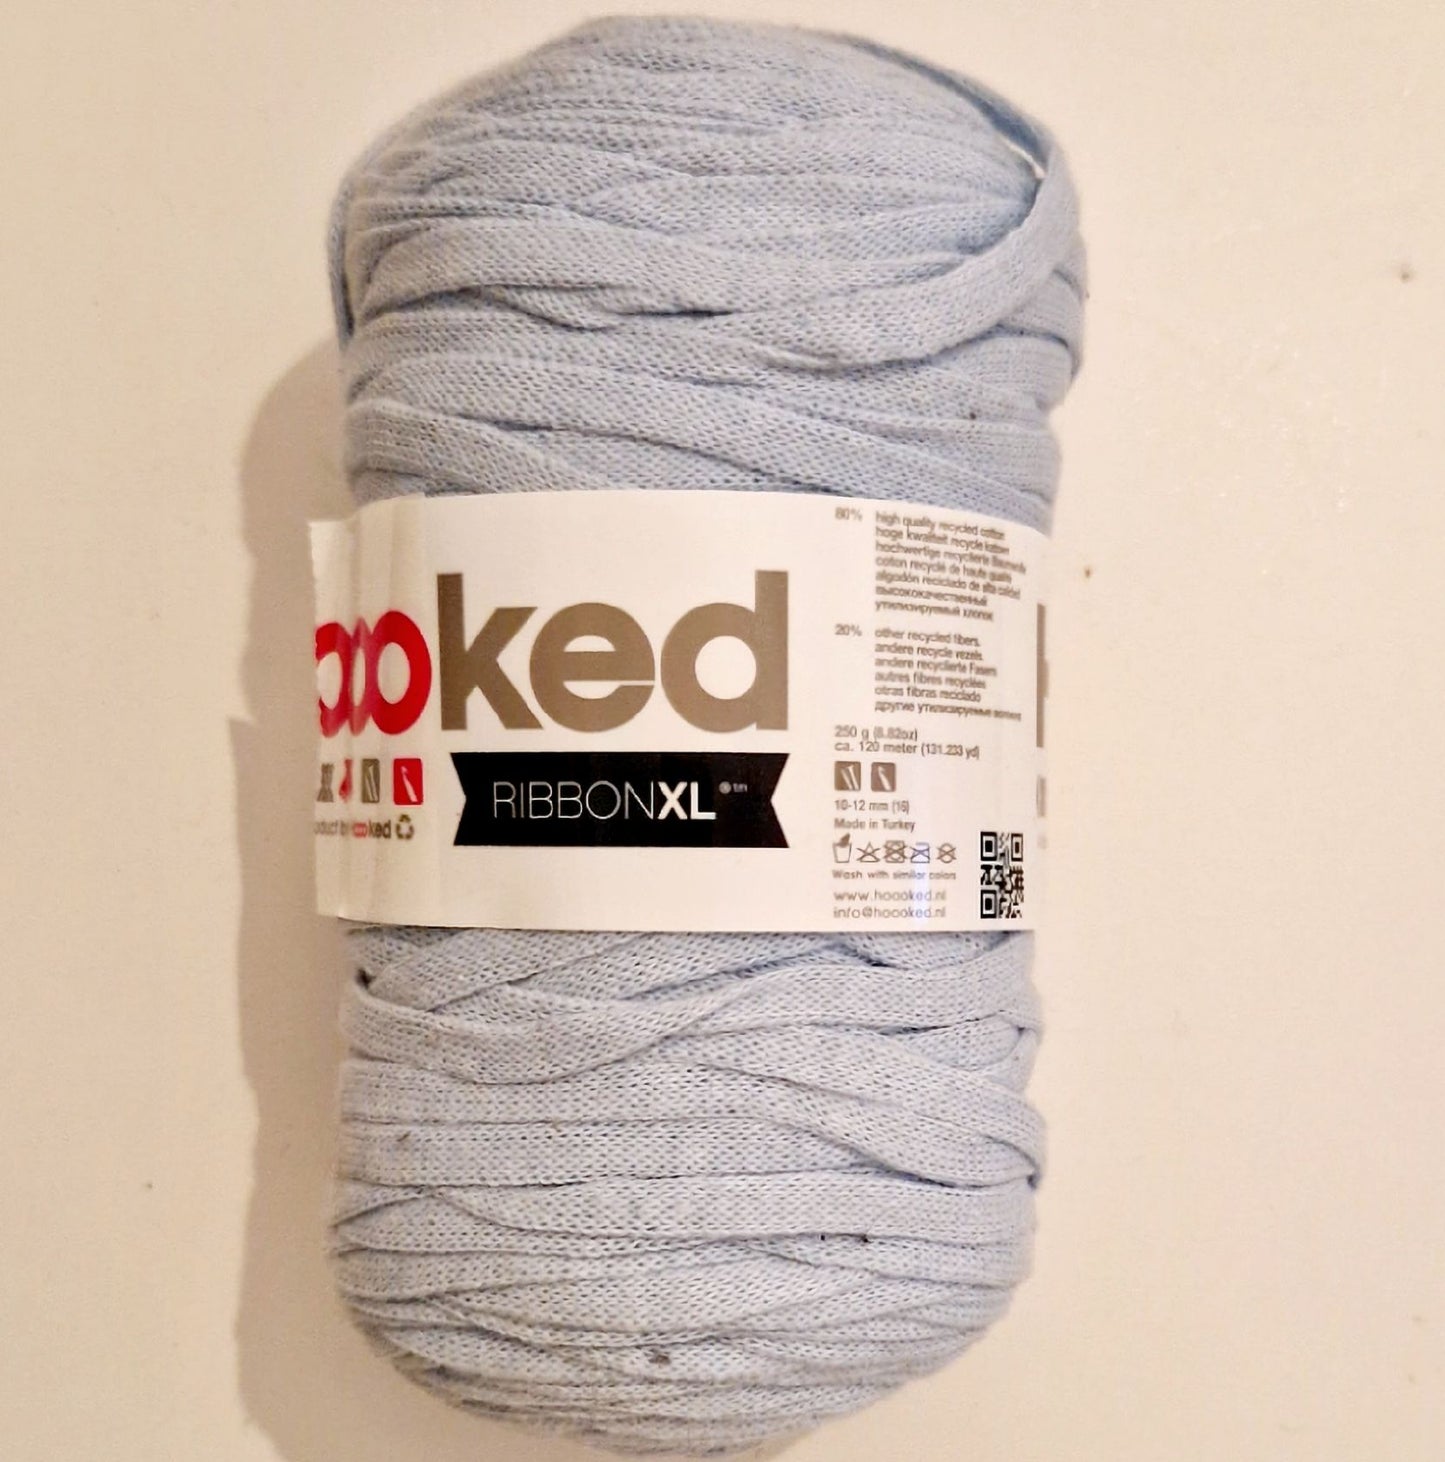 Hoooked Ribbon XL Powder Blue - 1